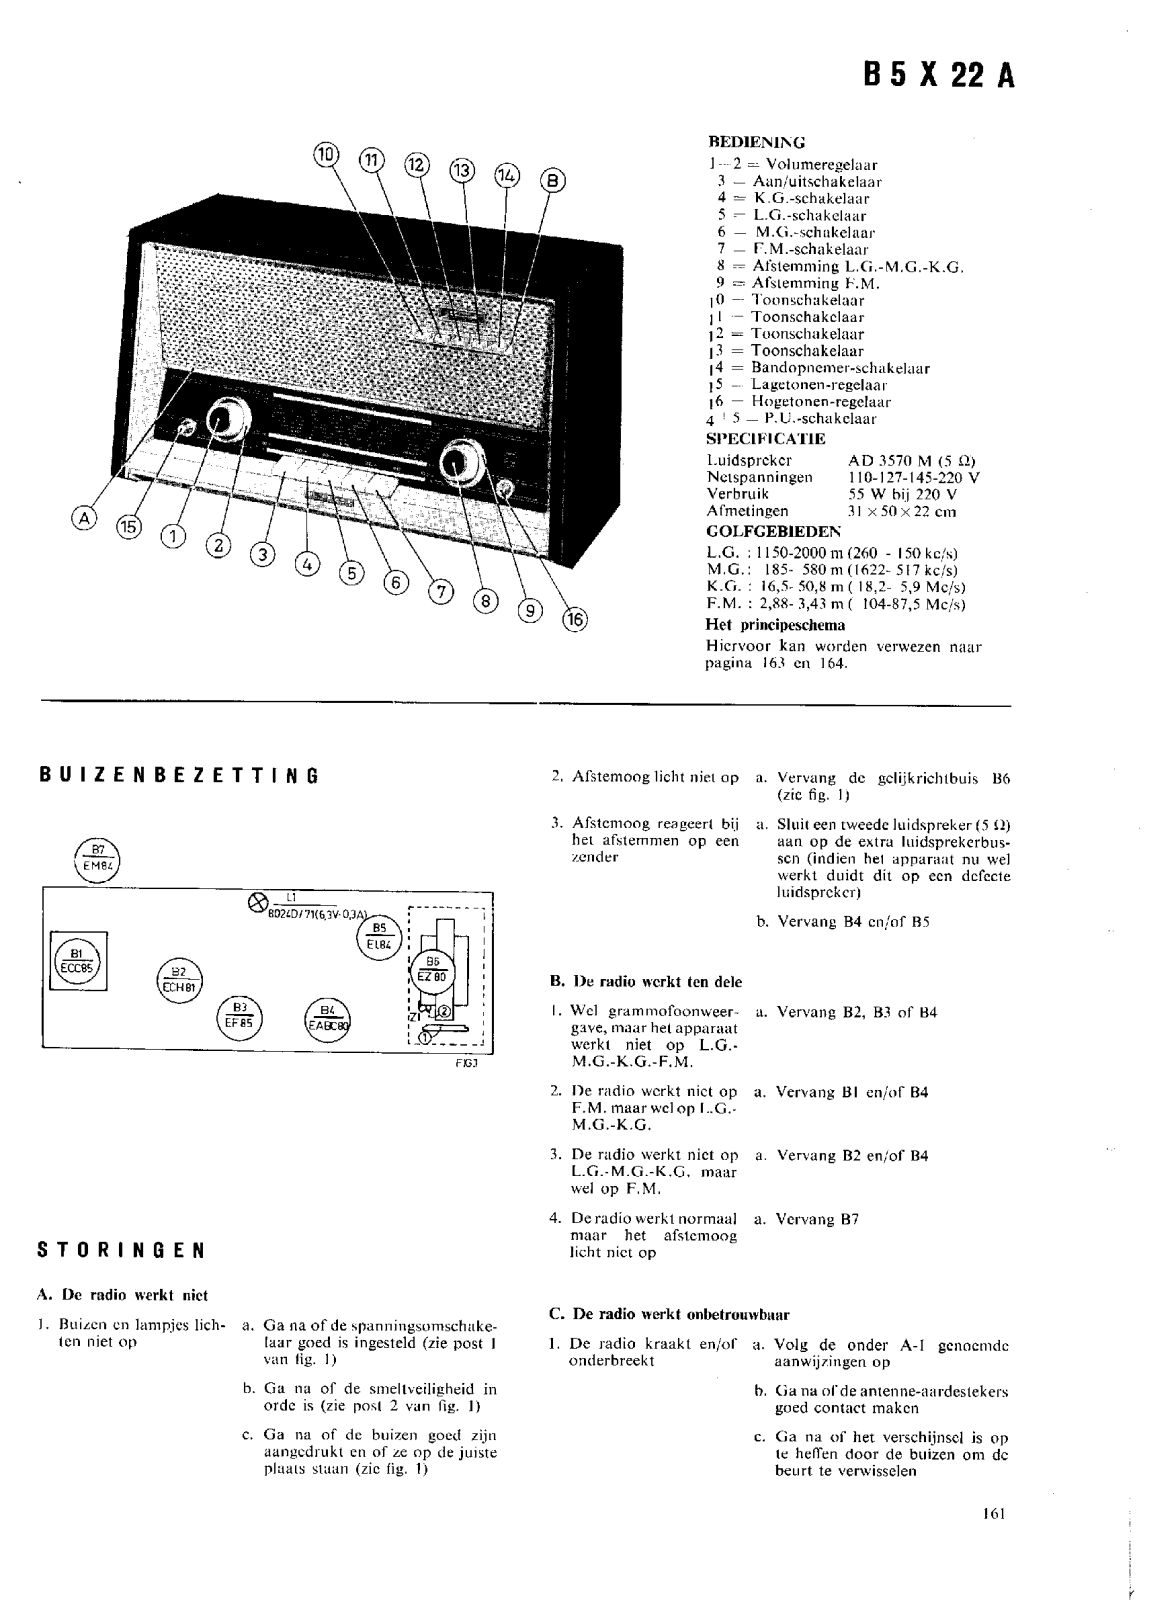 Philips B-5-X-22-A Service Manual